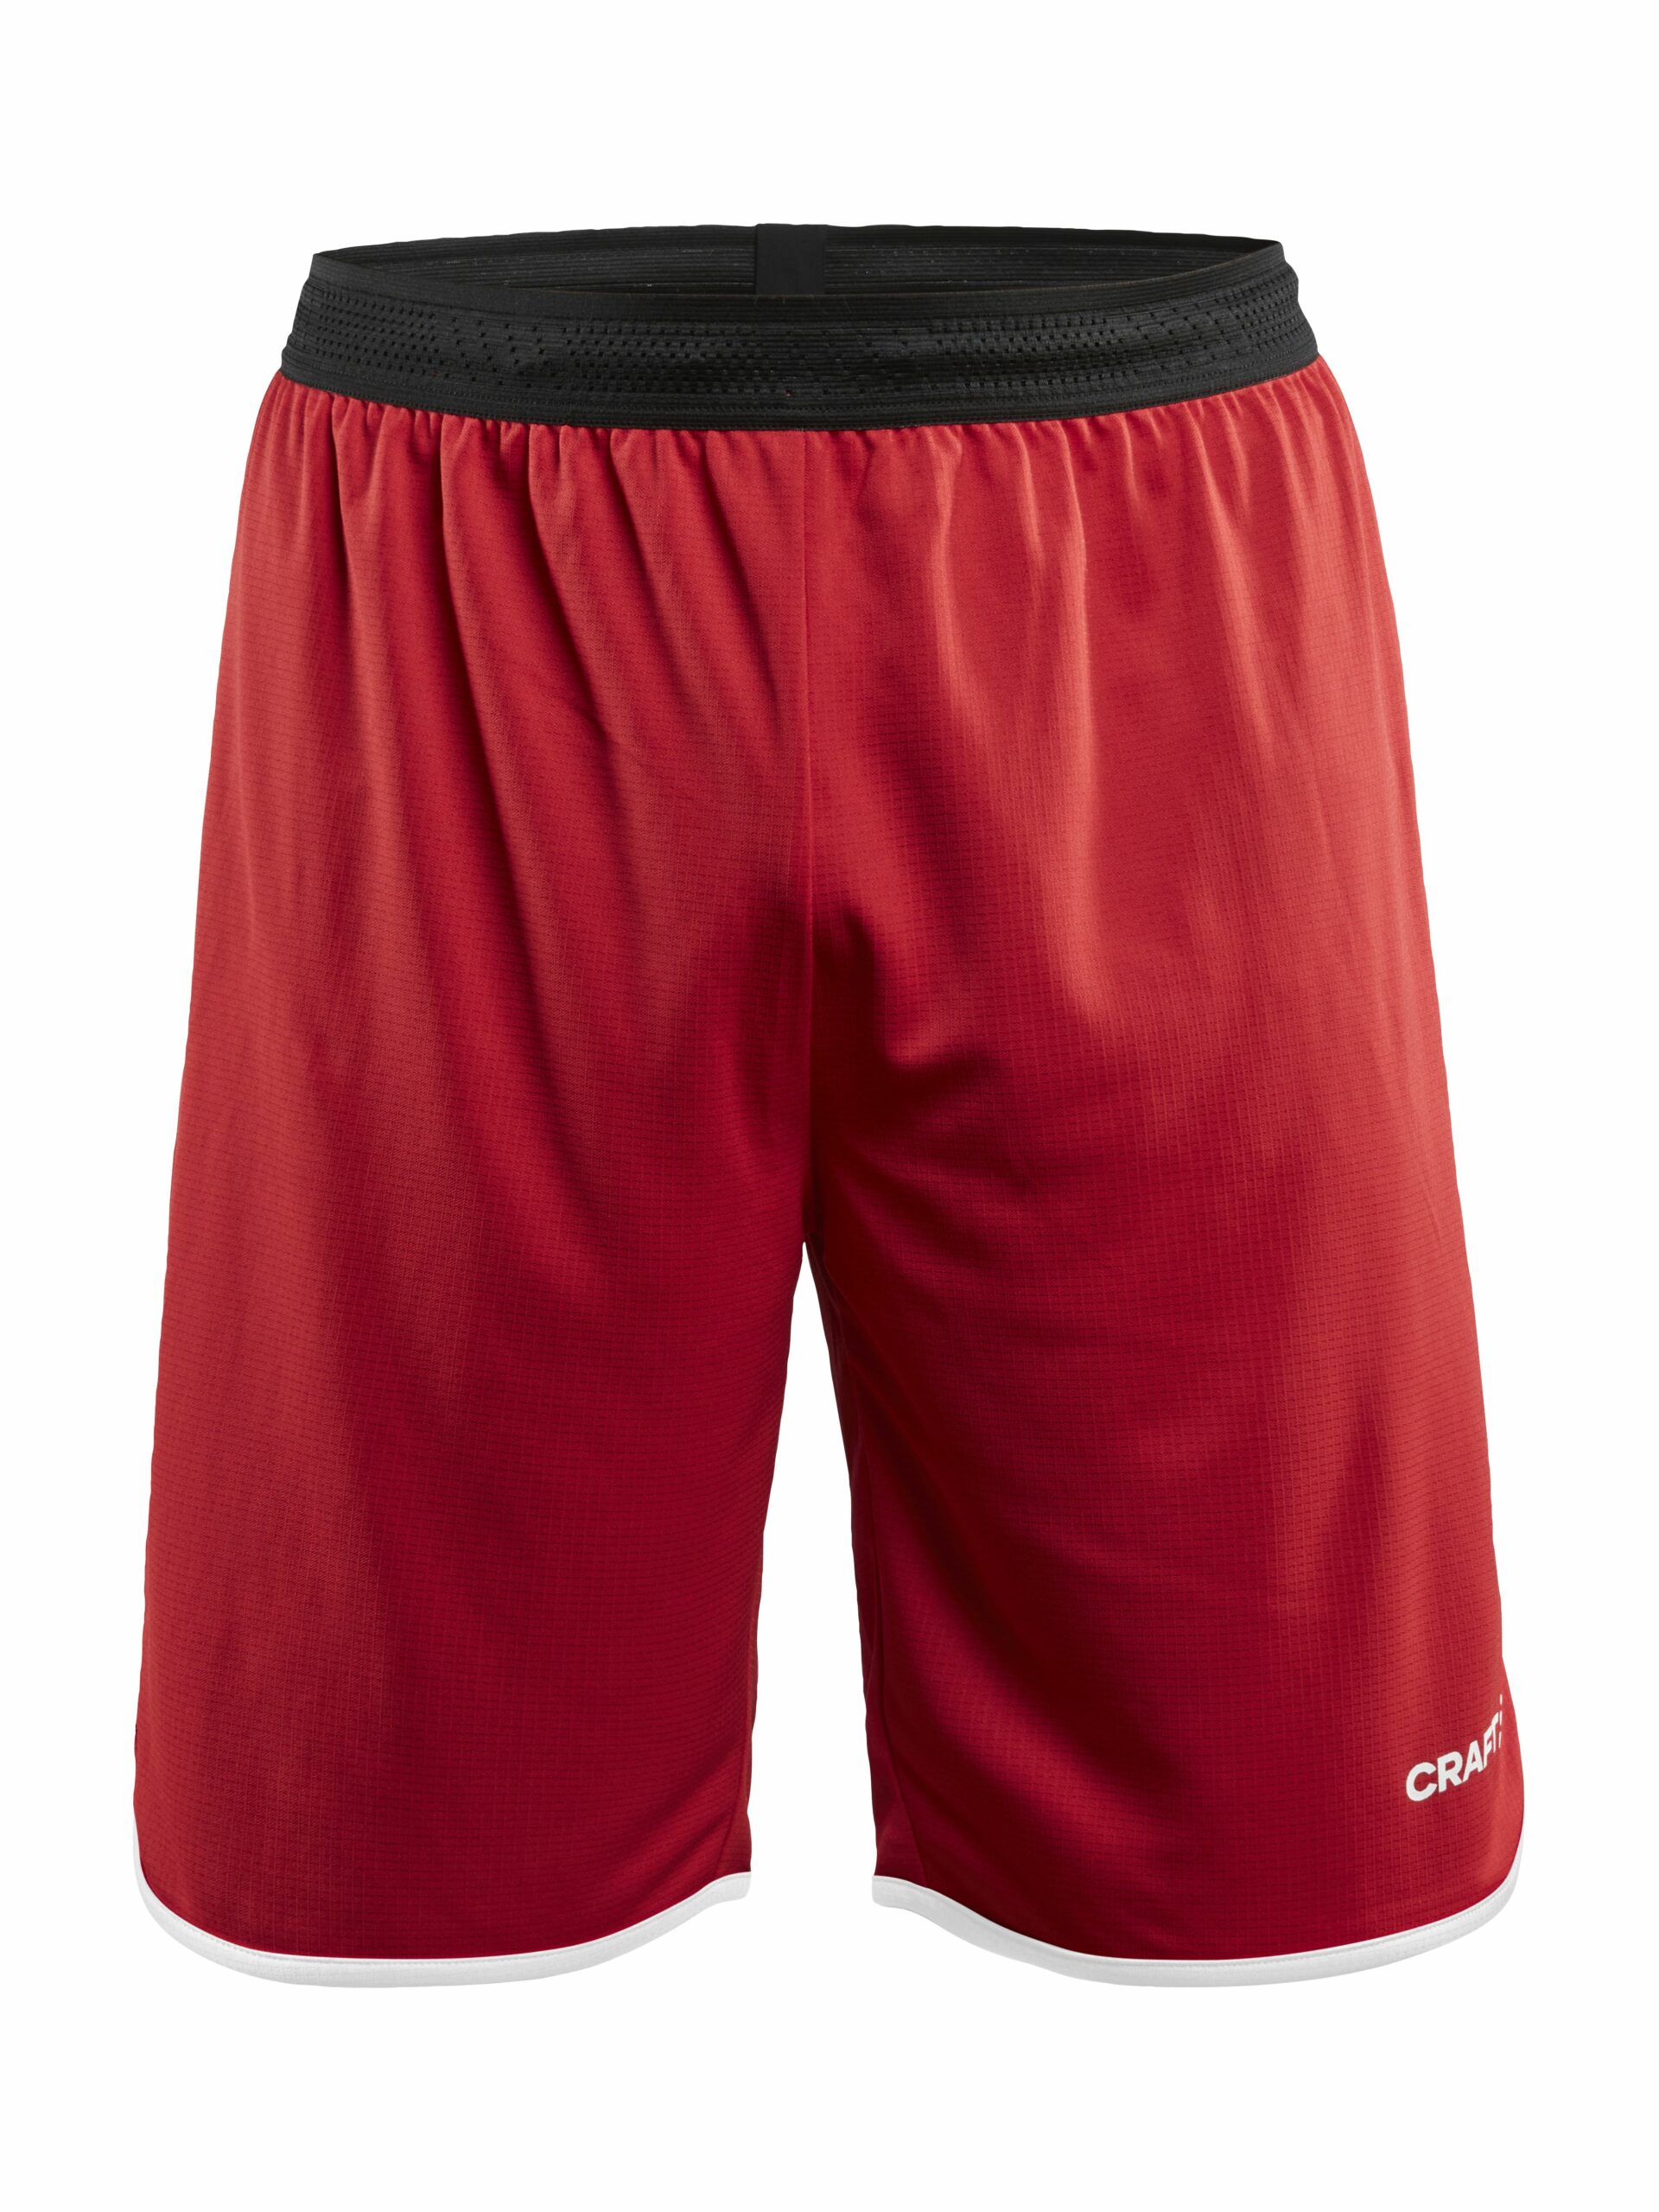 Craft - Progress Basket Shorts Maend - Bright Red XL